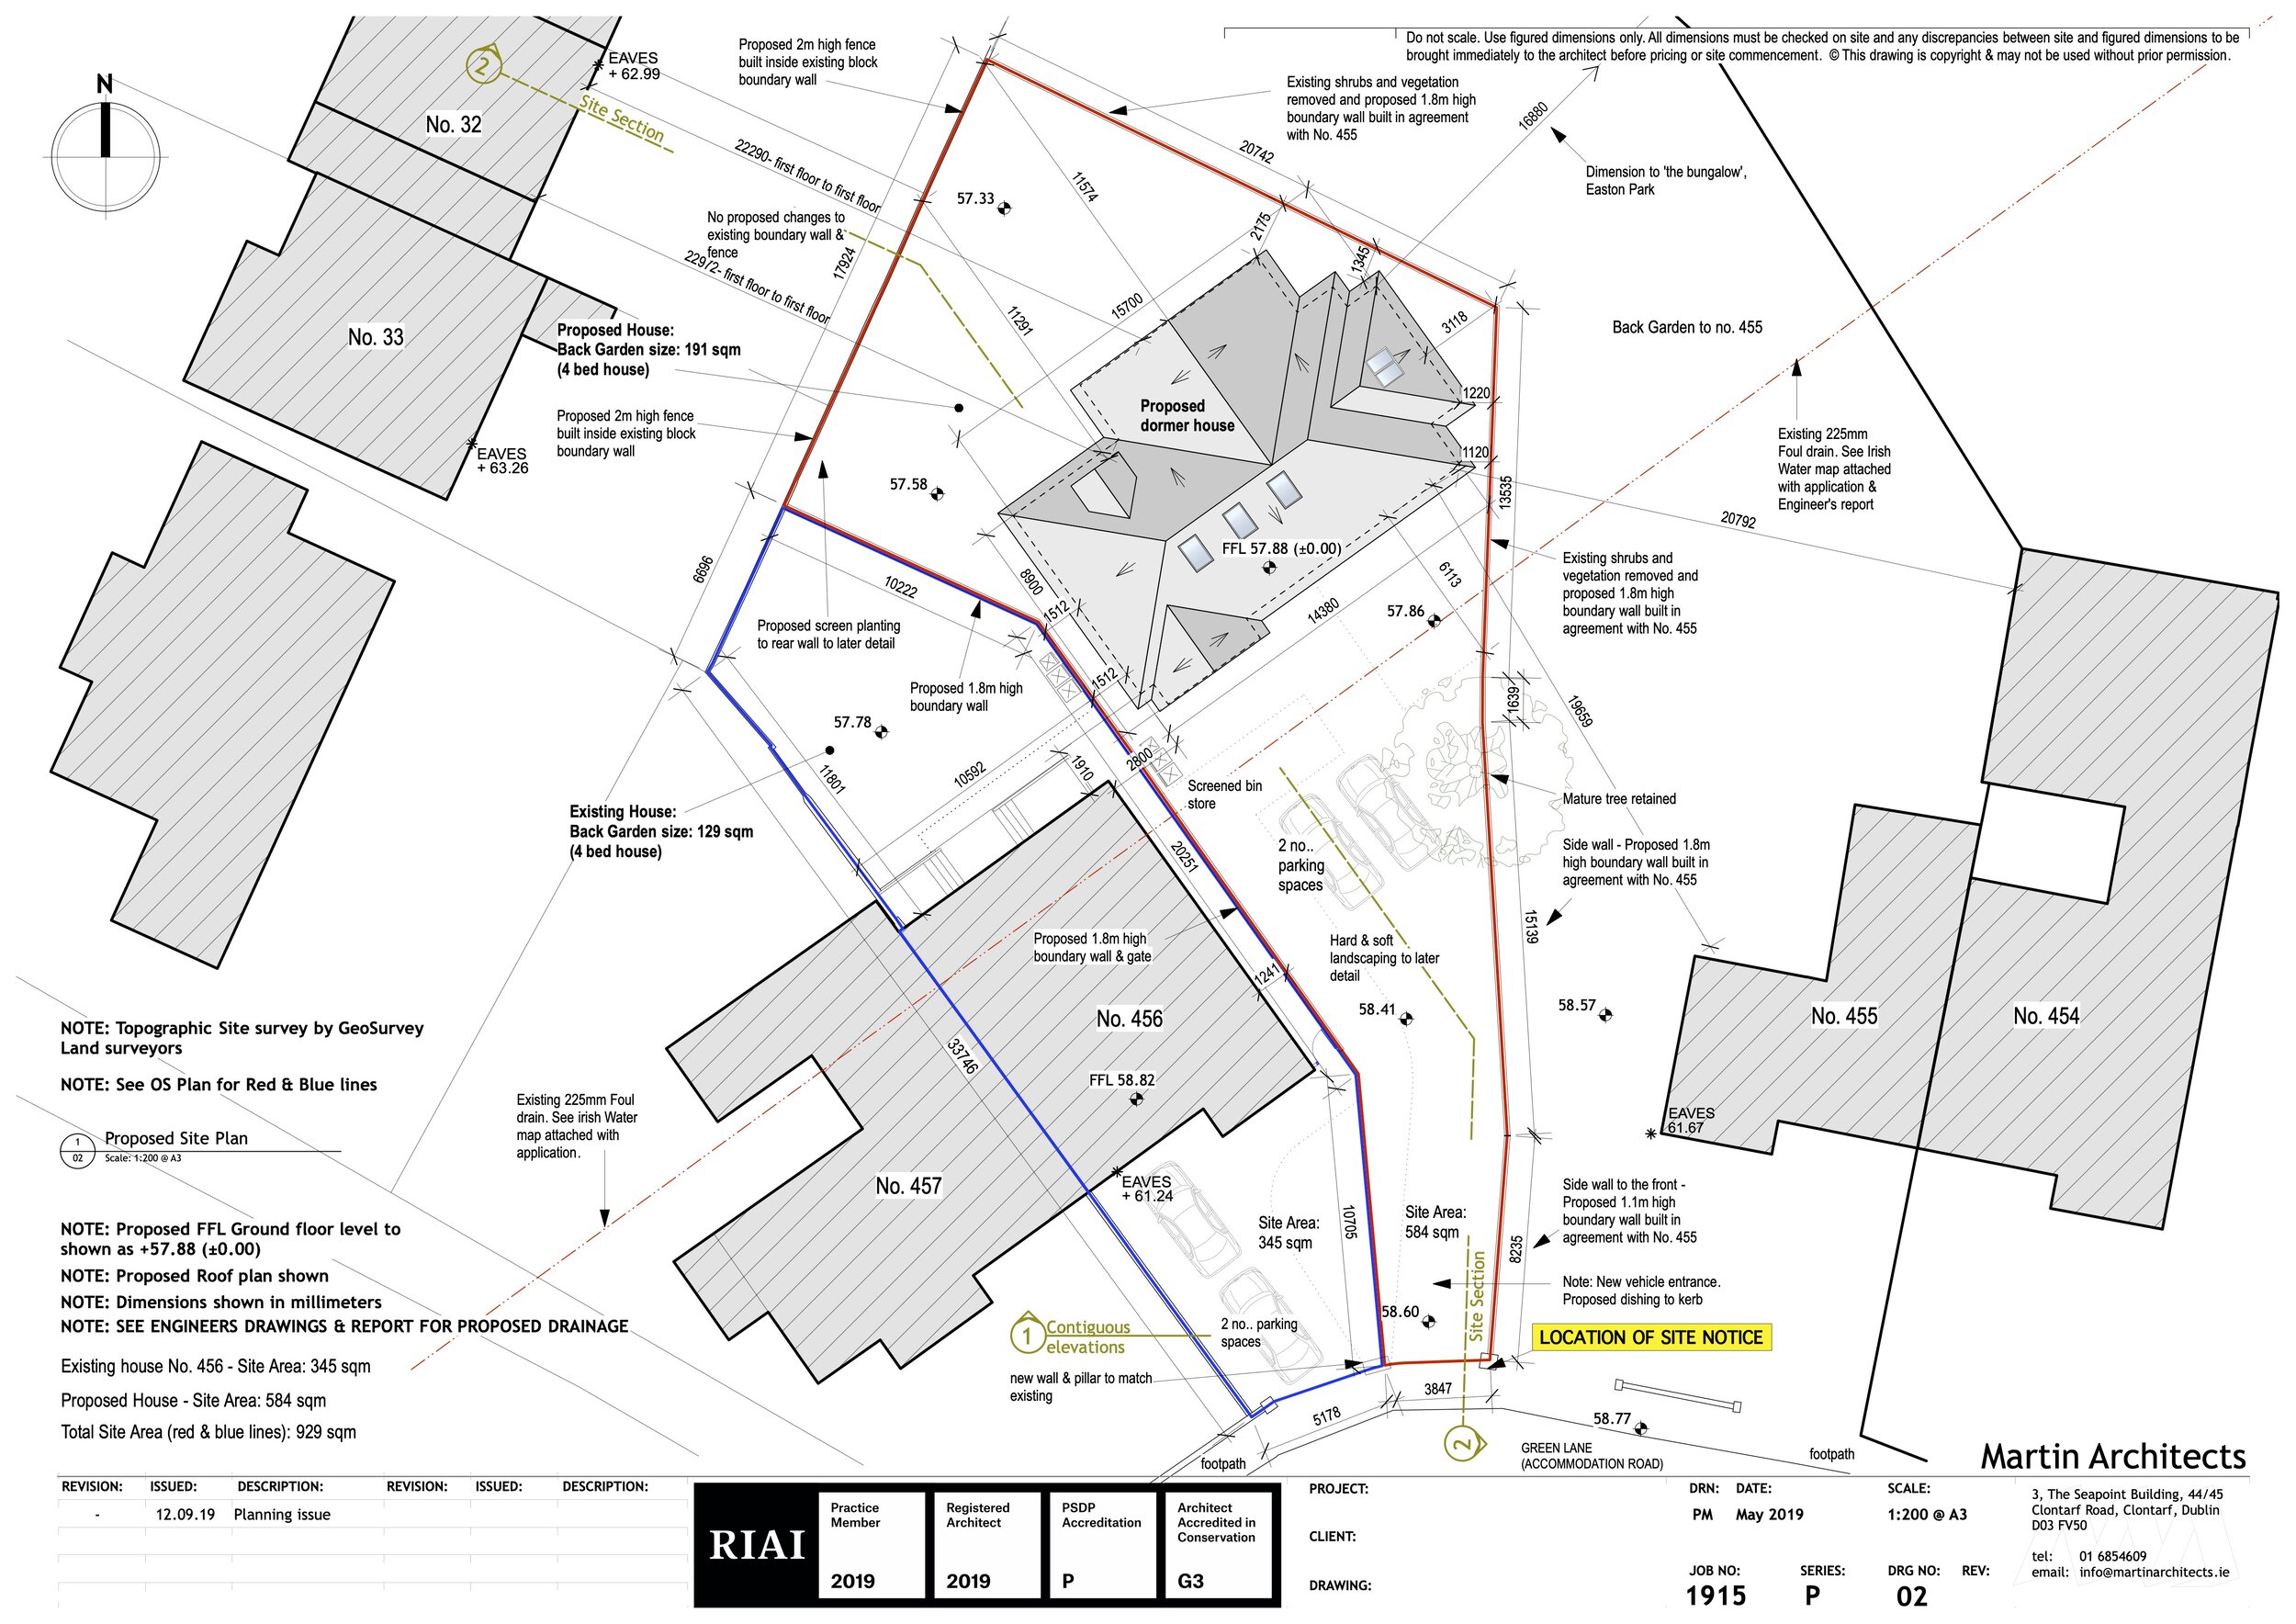 1915 P05 site plan.jpg